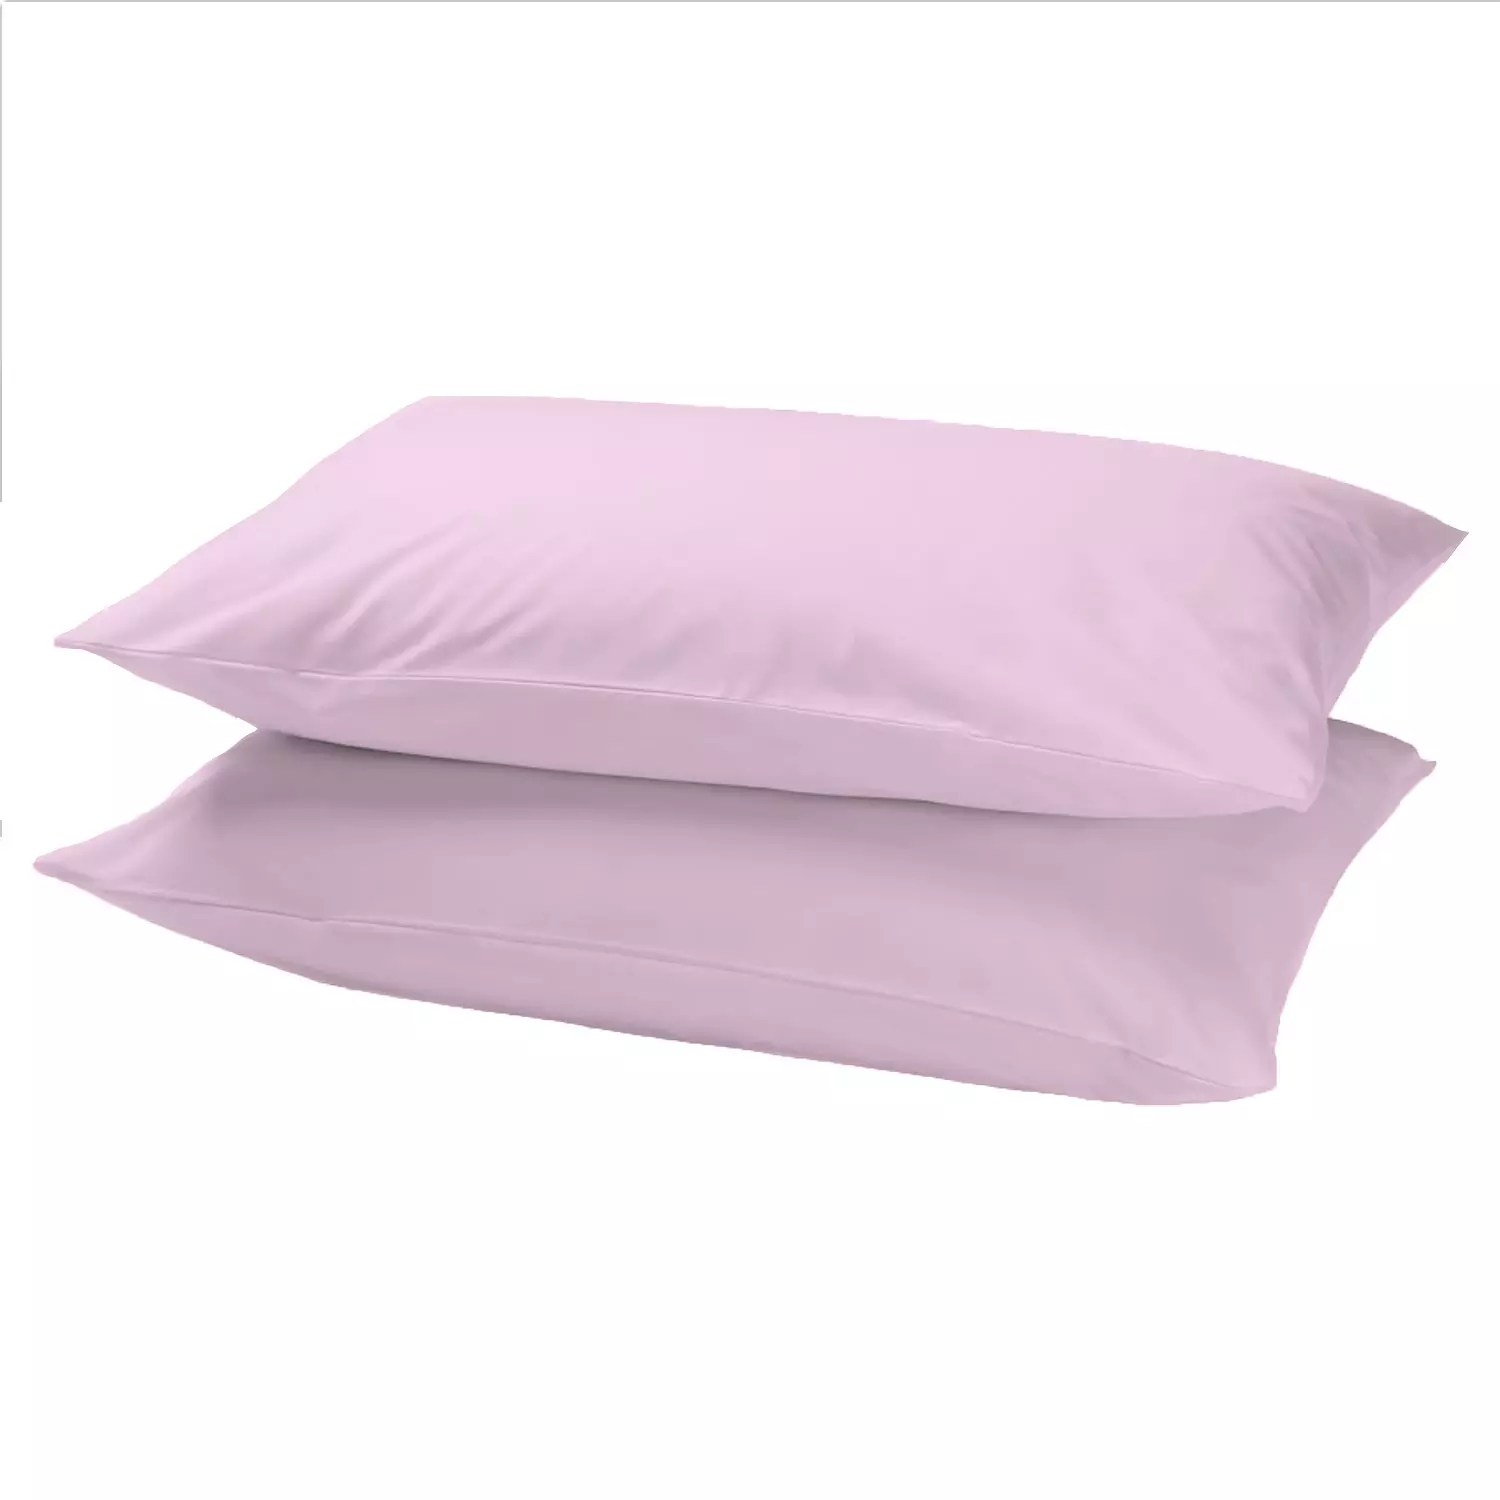 Solid color cotton rich set of 2 pilowcases, standard size, pale pink